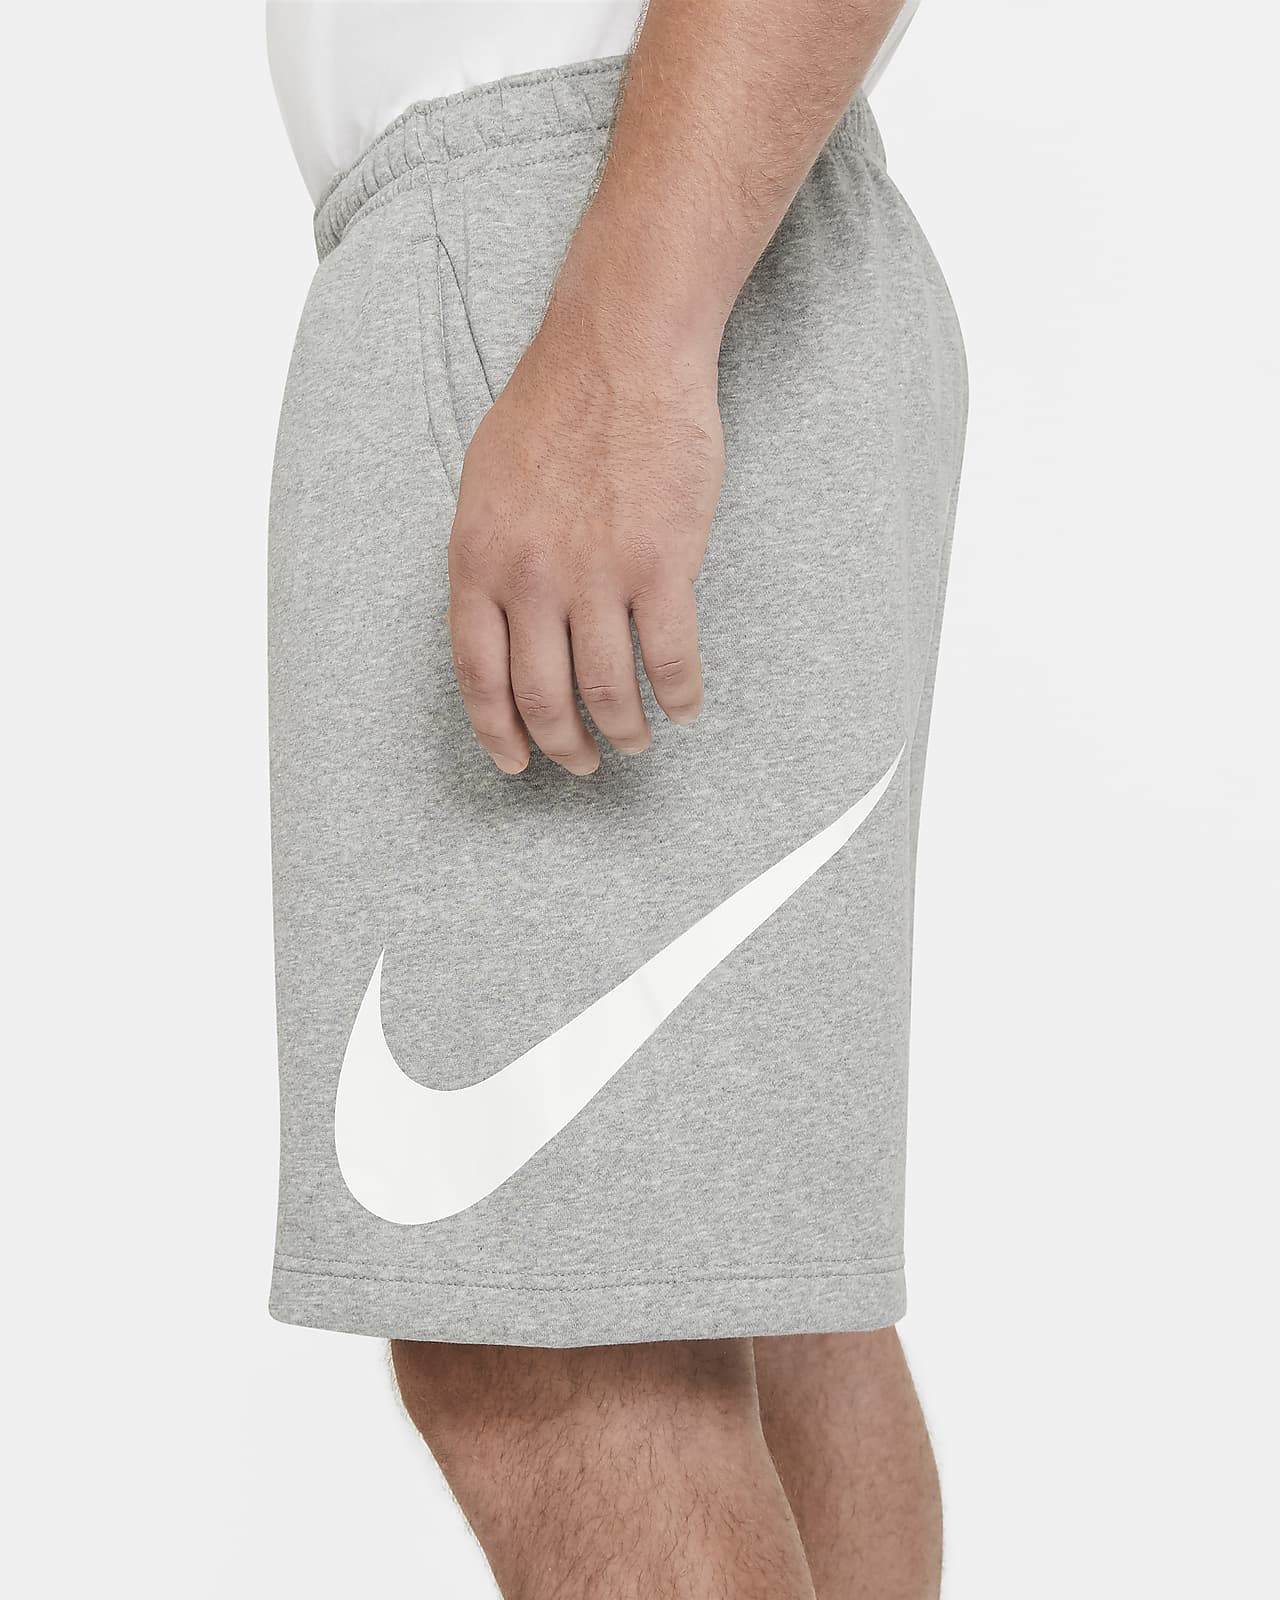 nike sportswear graphic shorts